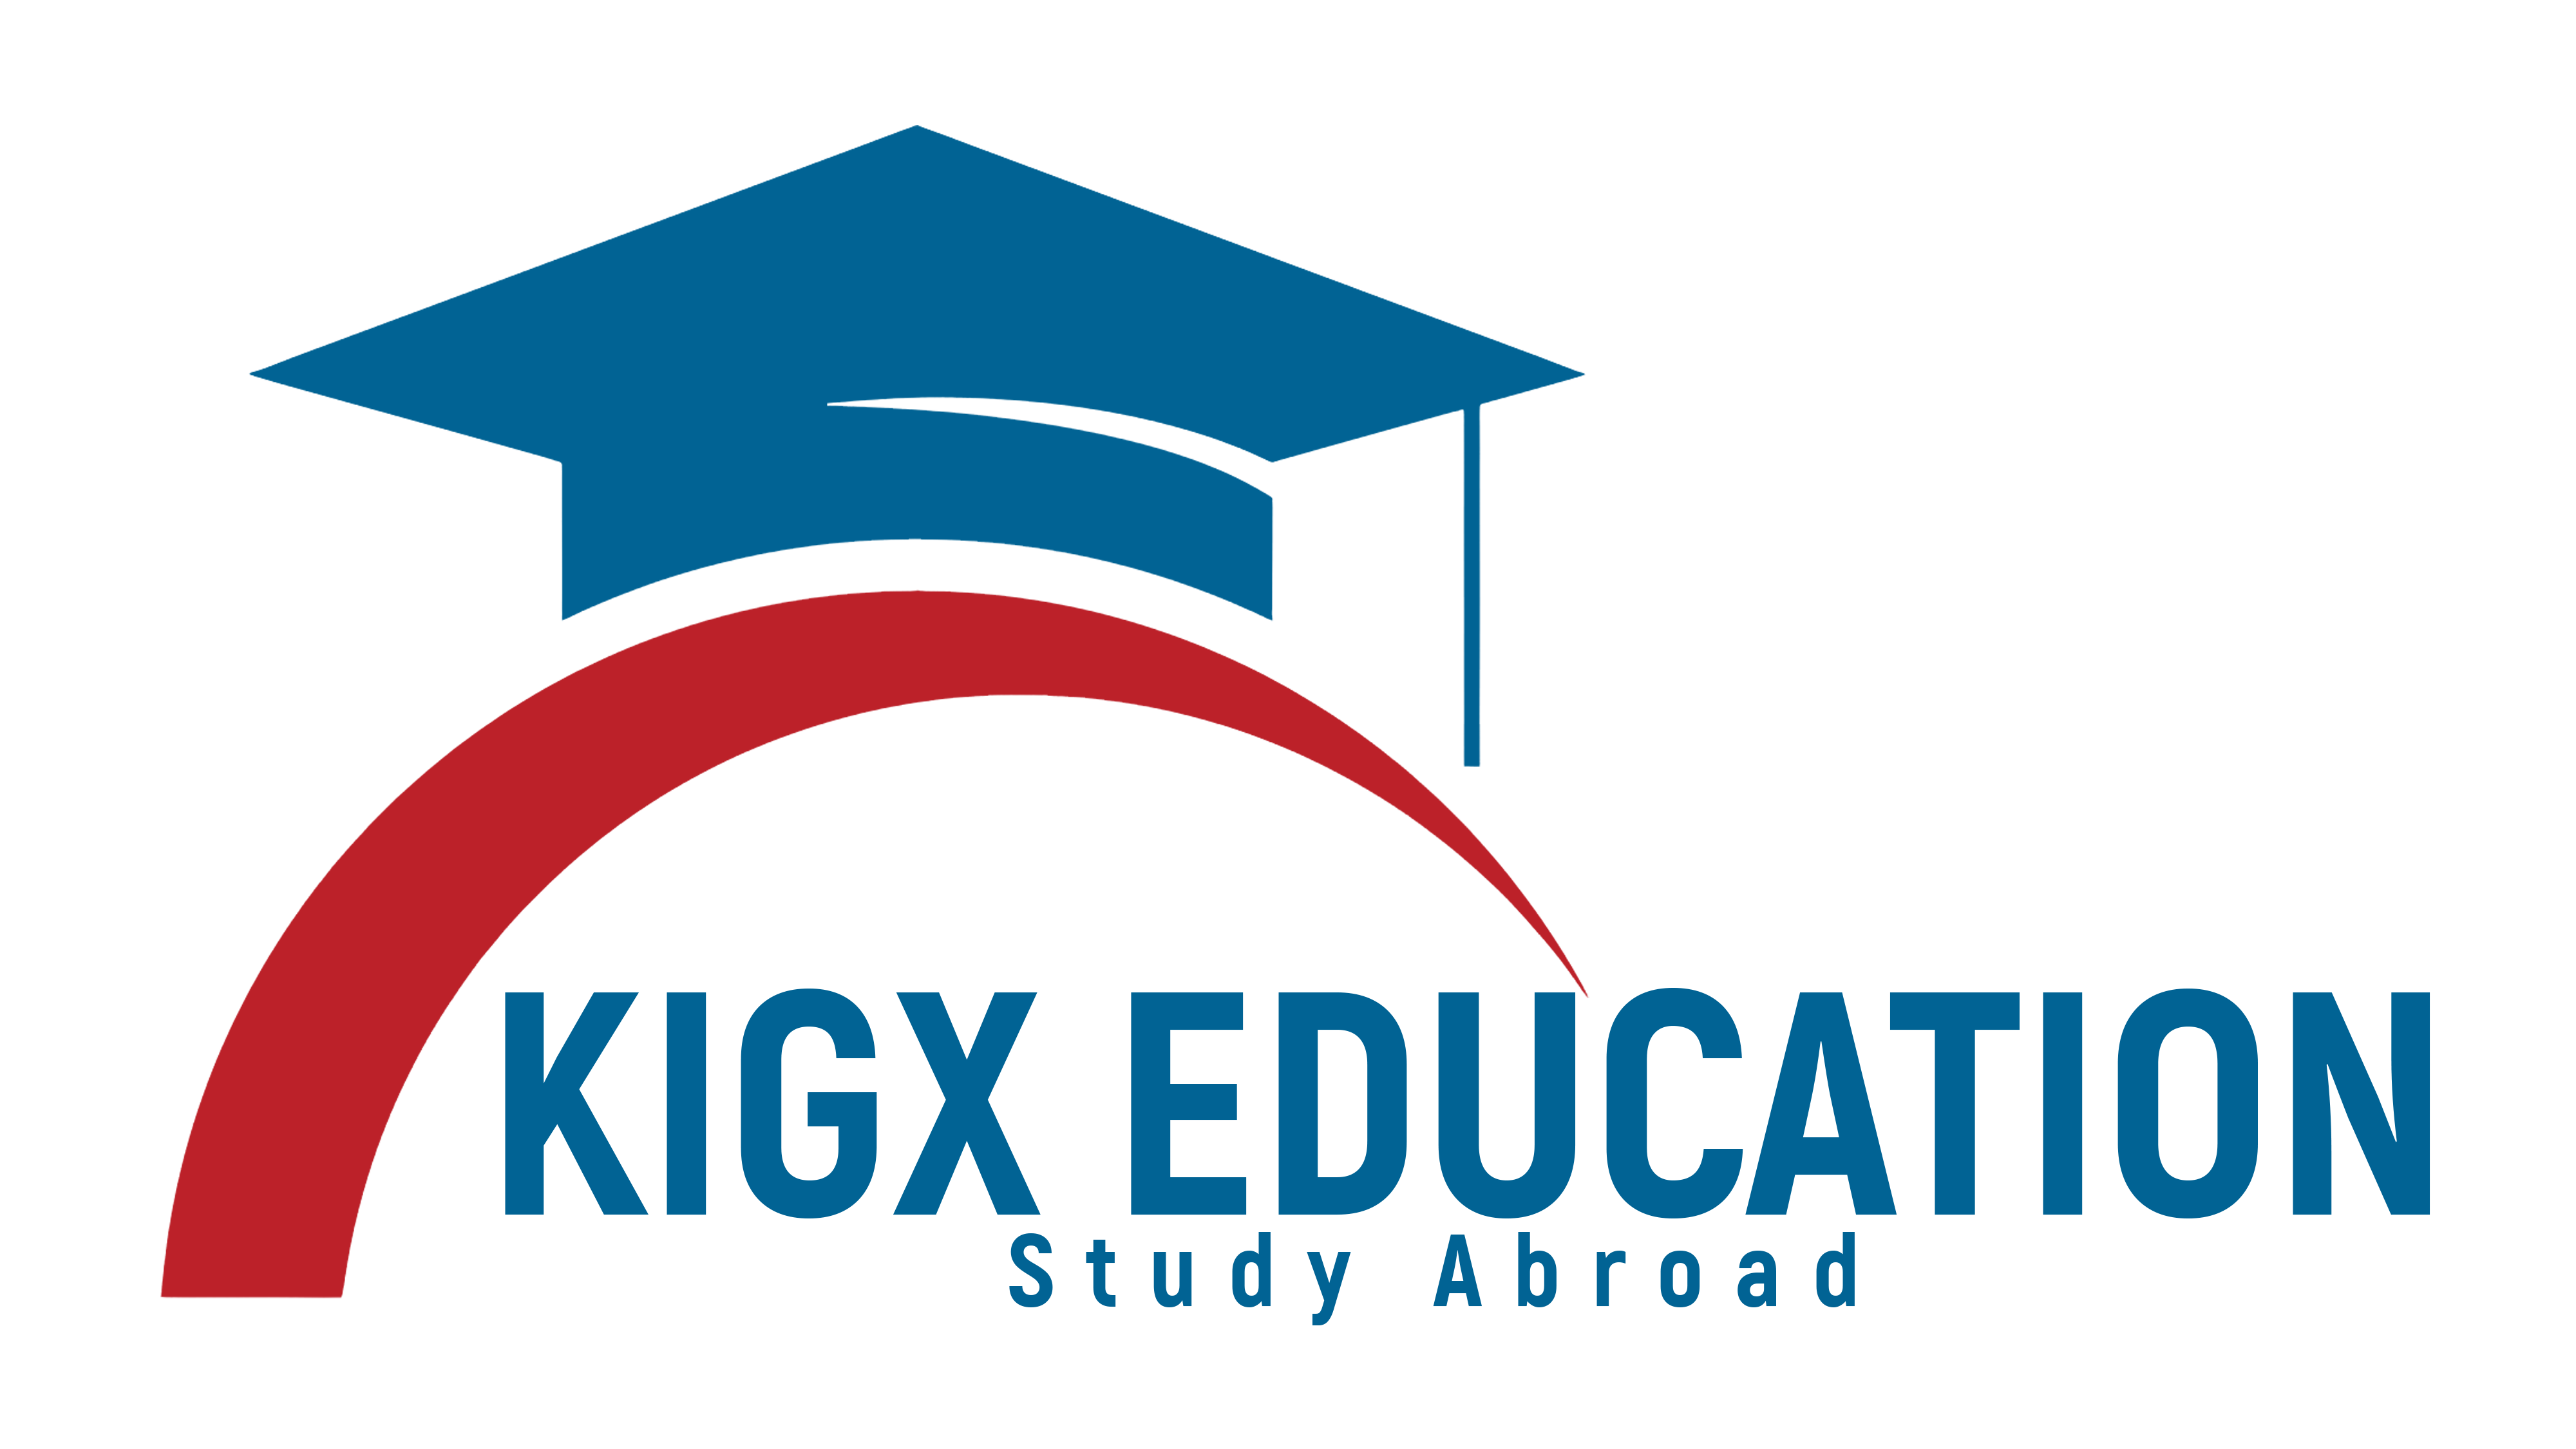 Kigx Education